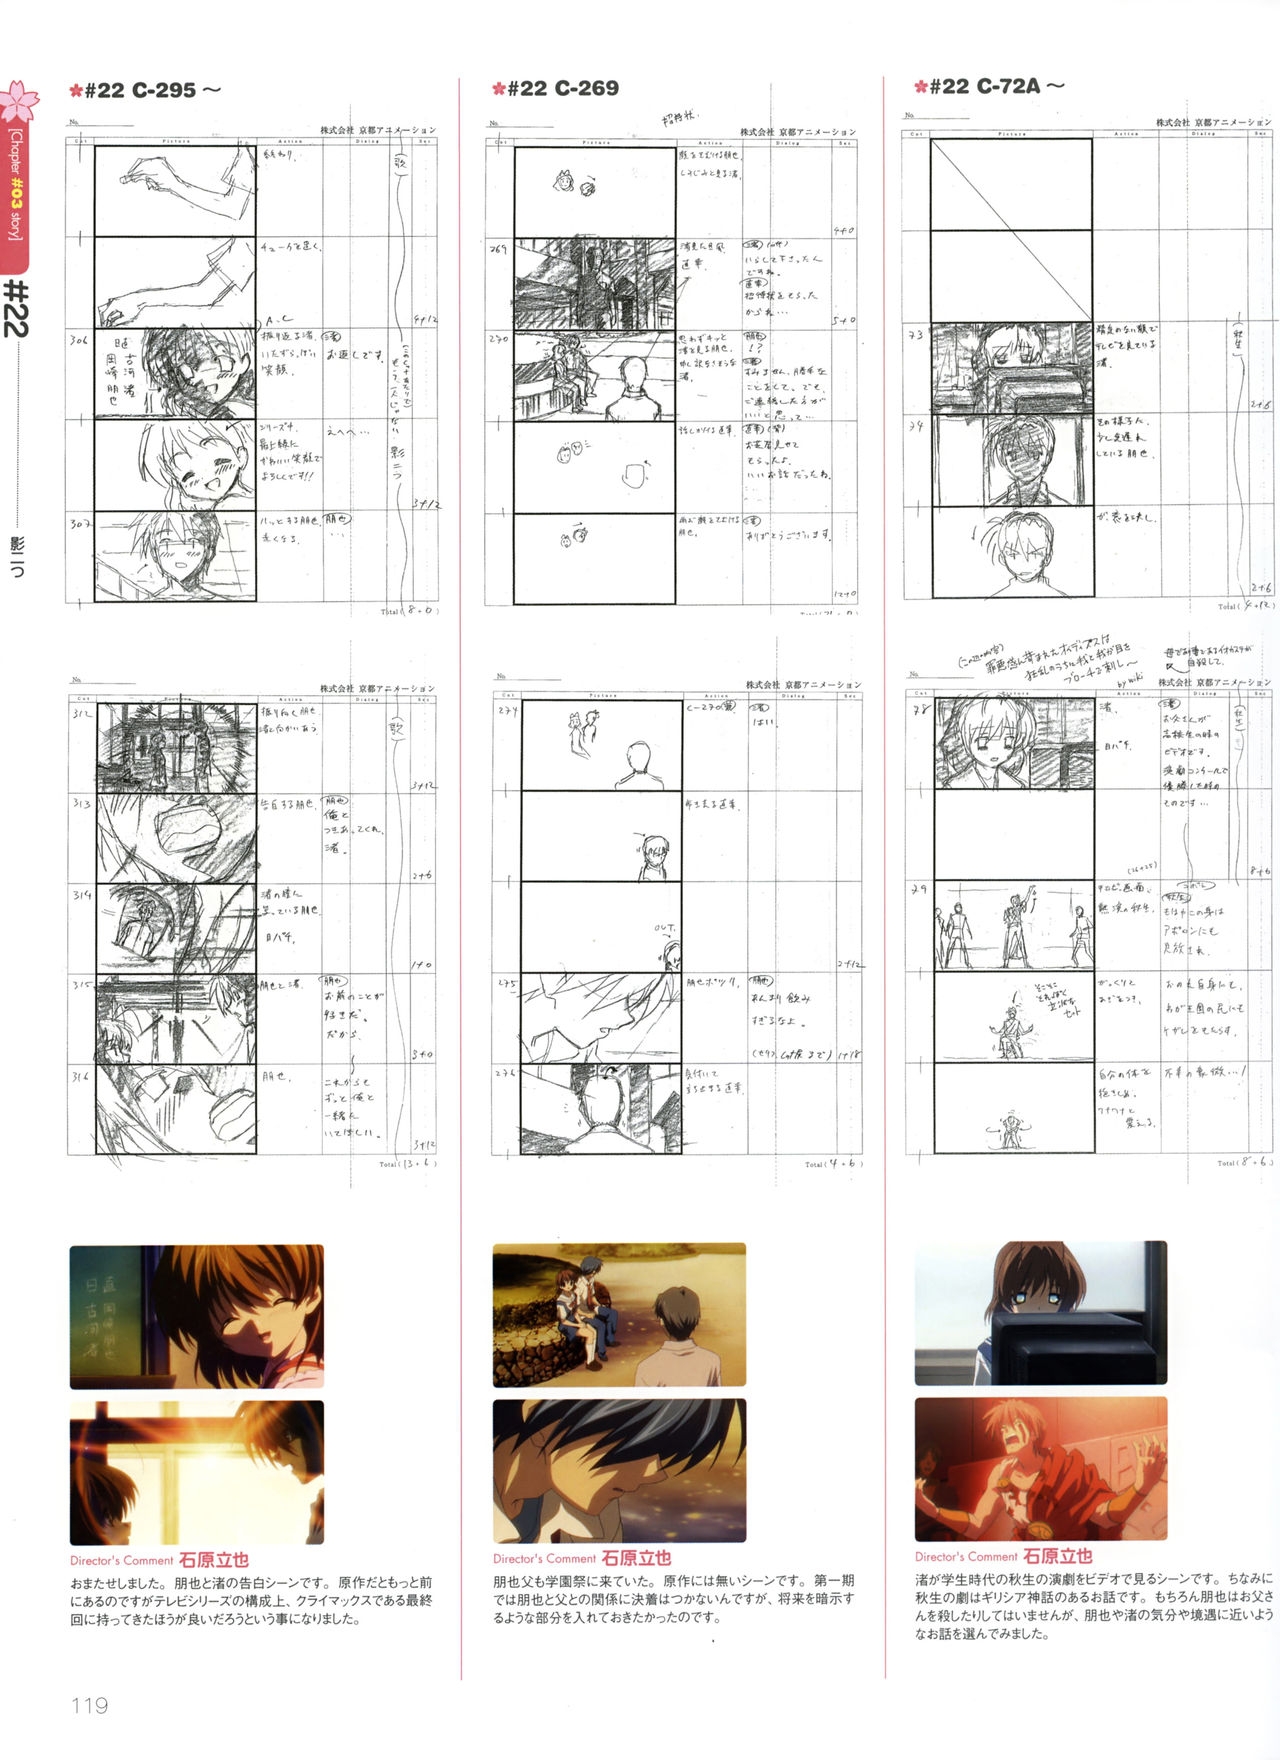 Clannad TV Animation Visual Fan Book 122